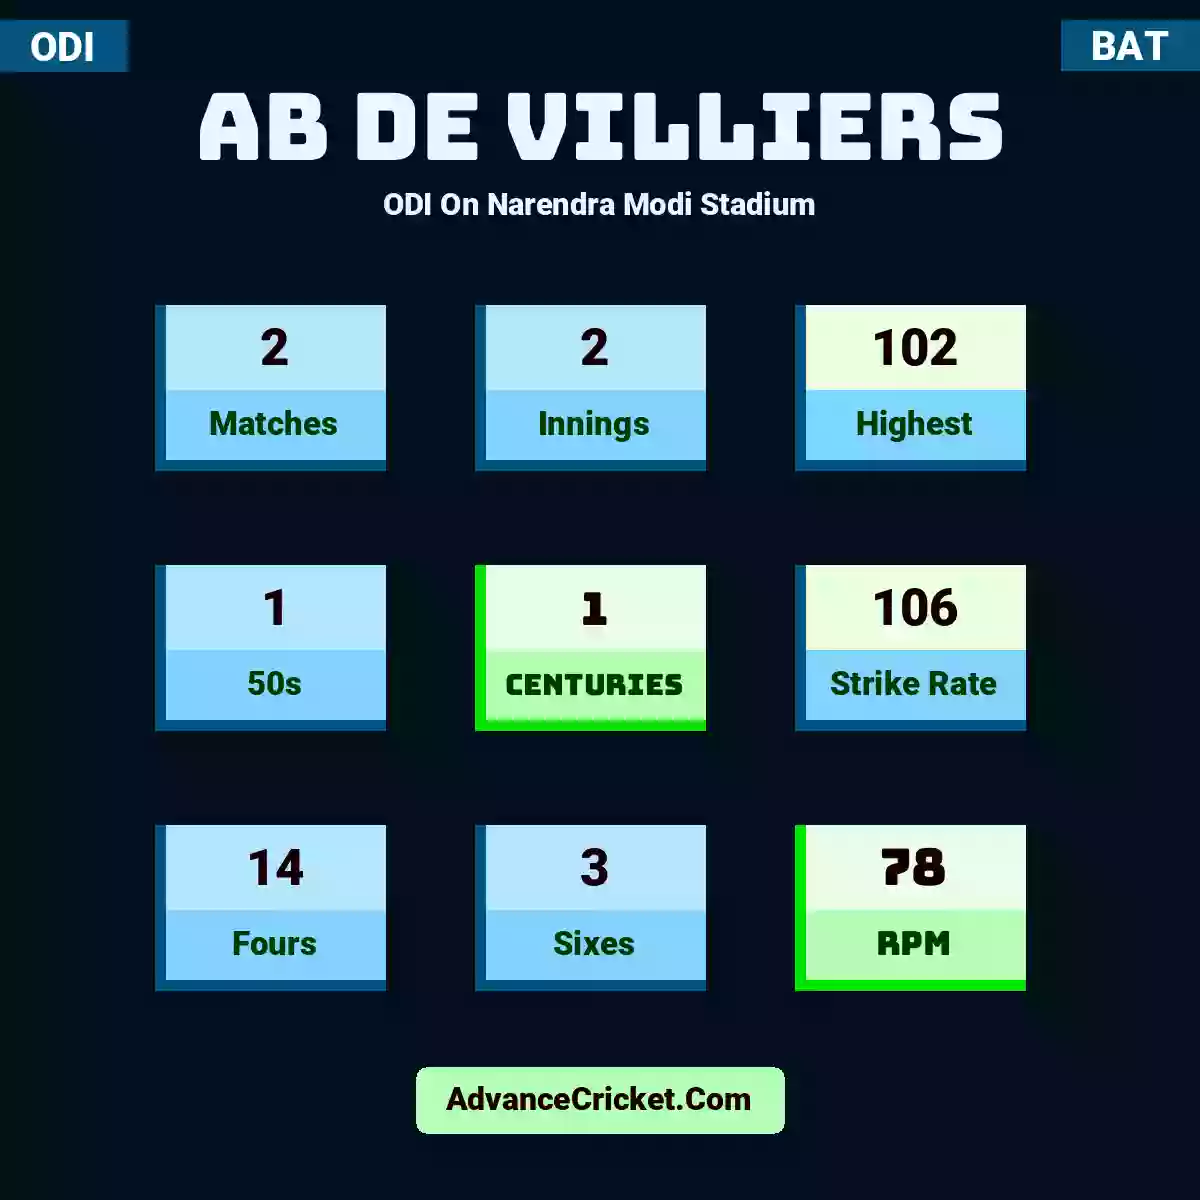 AB de Villiers ODI  On Narendra Modi Stadium, AB de Villiers played 2 matches, scored 102 runs as highest, 1 half-centuries, and 1 centuries, with a strike rate of 106. A.Villiers hit 14 fours and 3 sixes, with an RPM of 78.